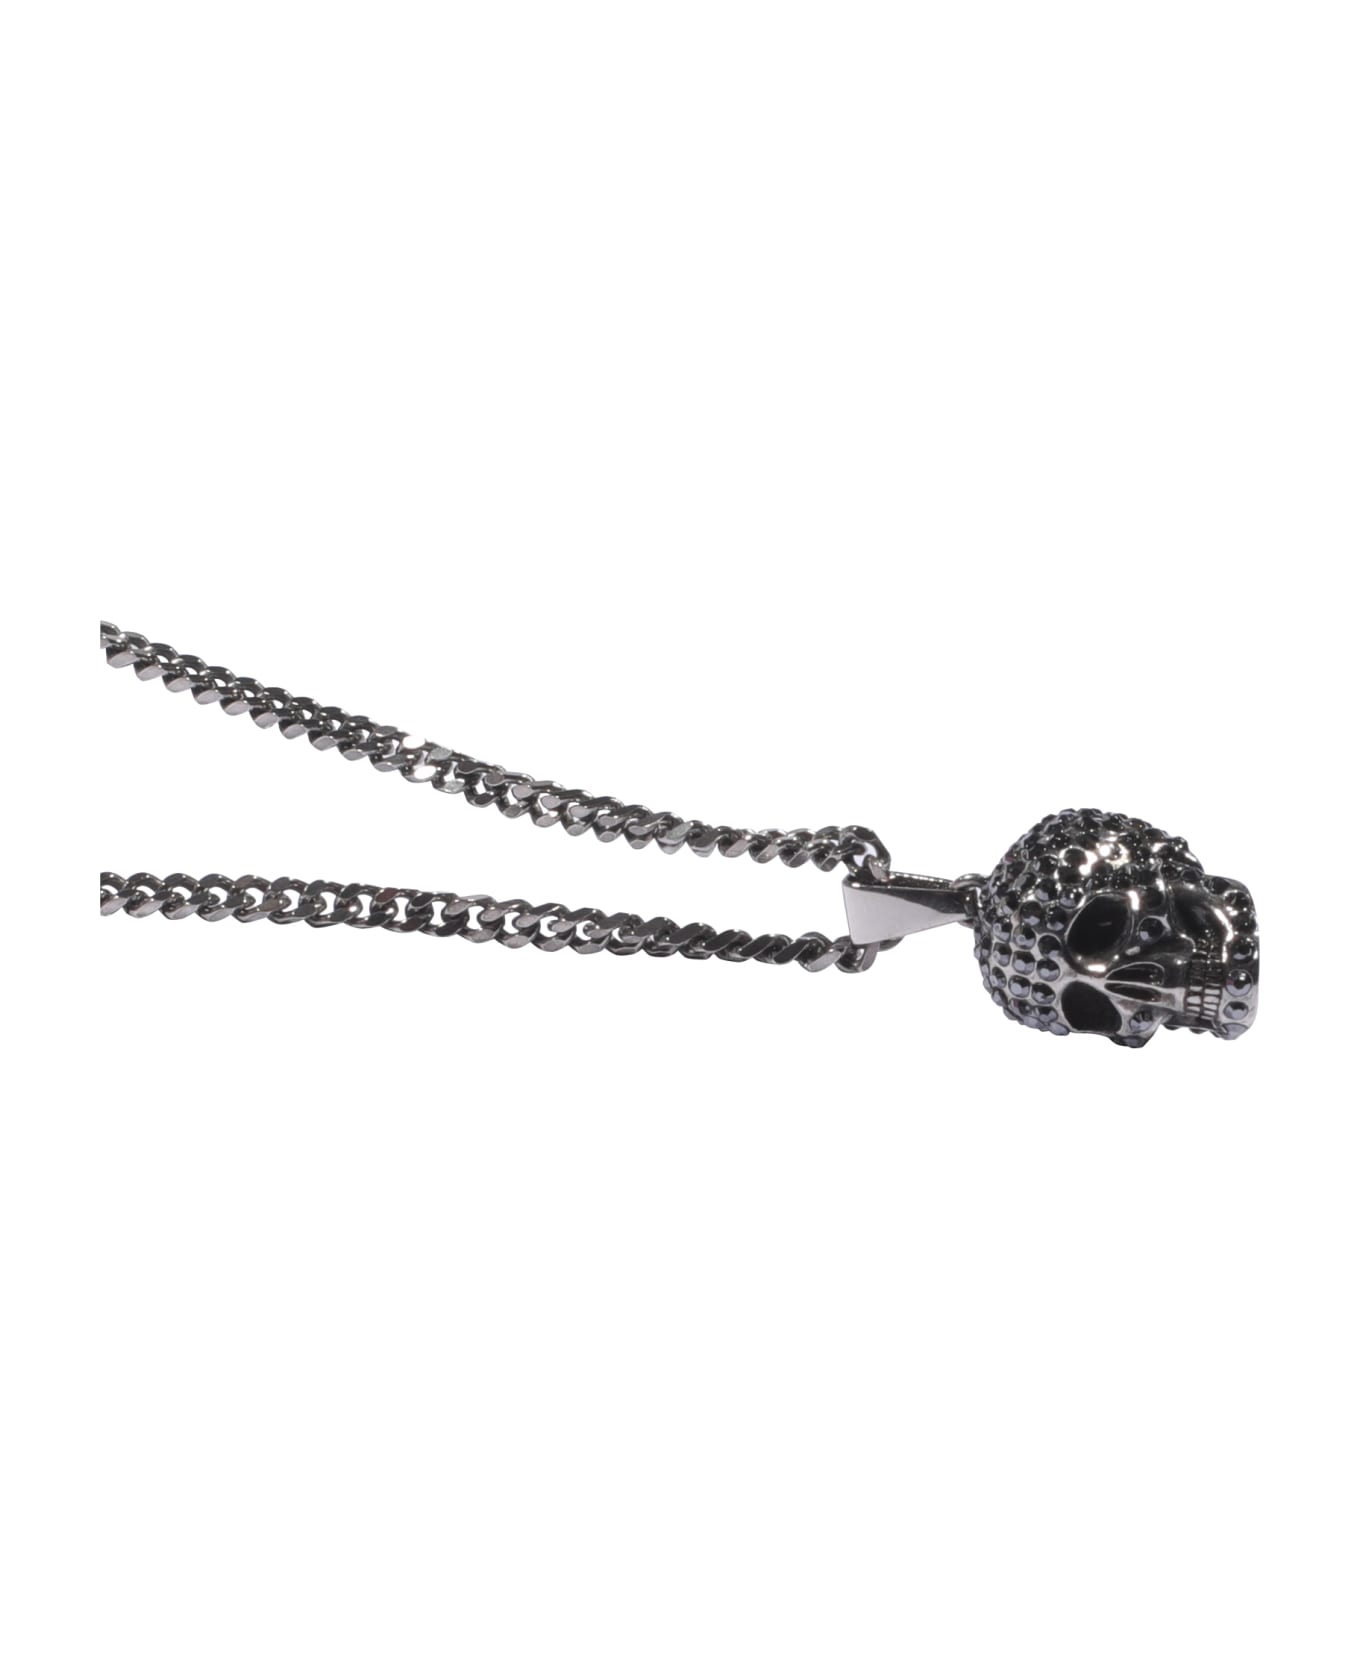 Alexander McQueen Skull Necklace - Silver